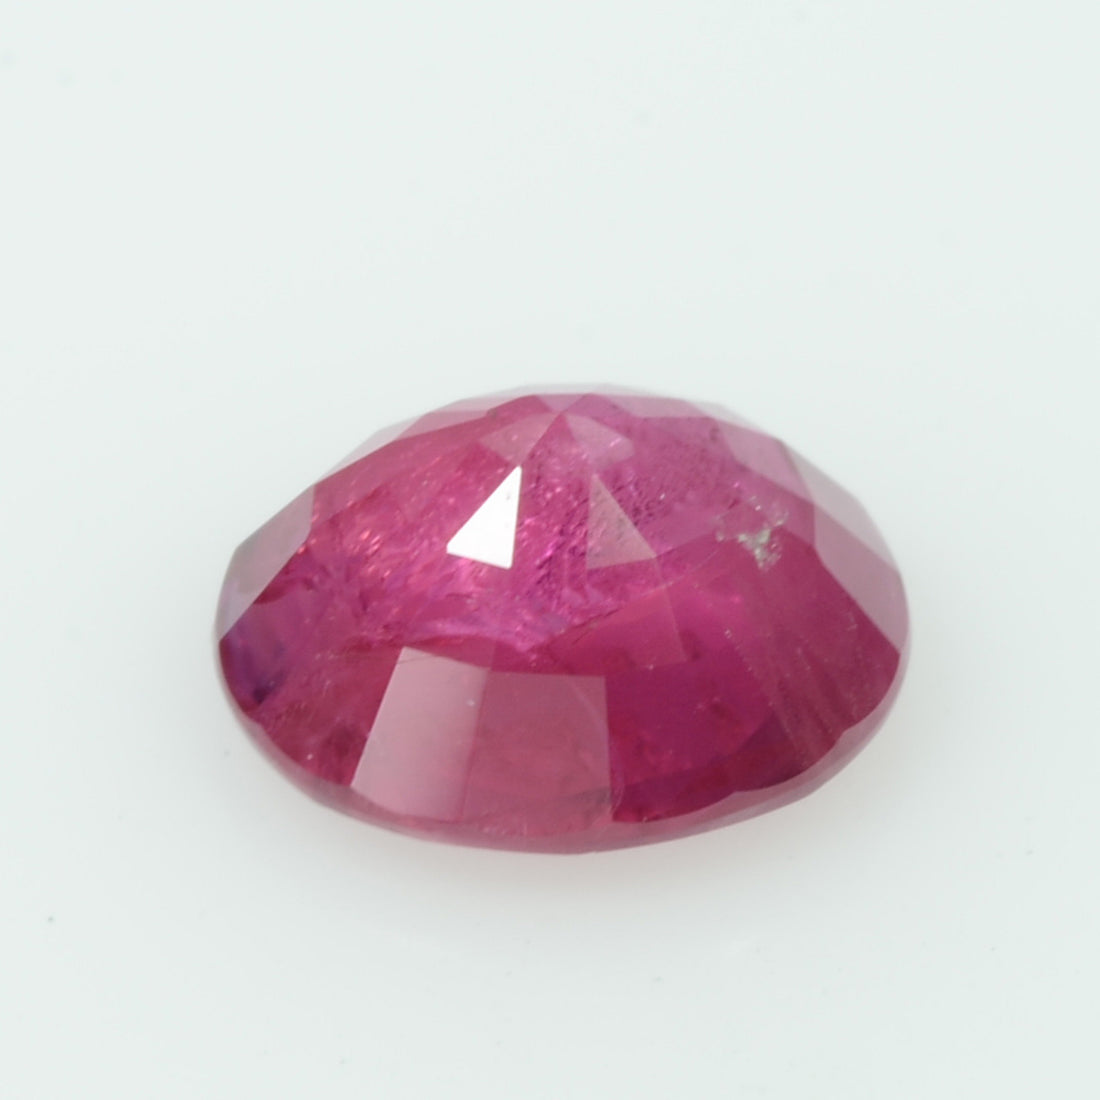 1.62 cts Natural Burma Ruby Loose Gemstone Oval Cut - Thai Gems Export Ltd.